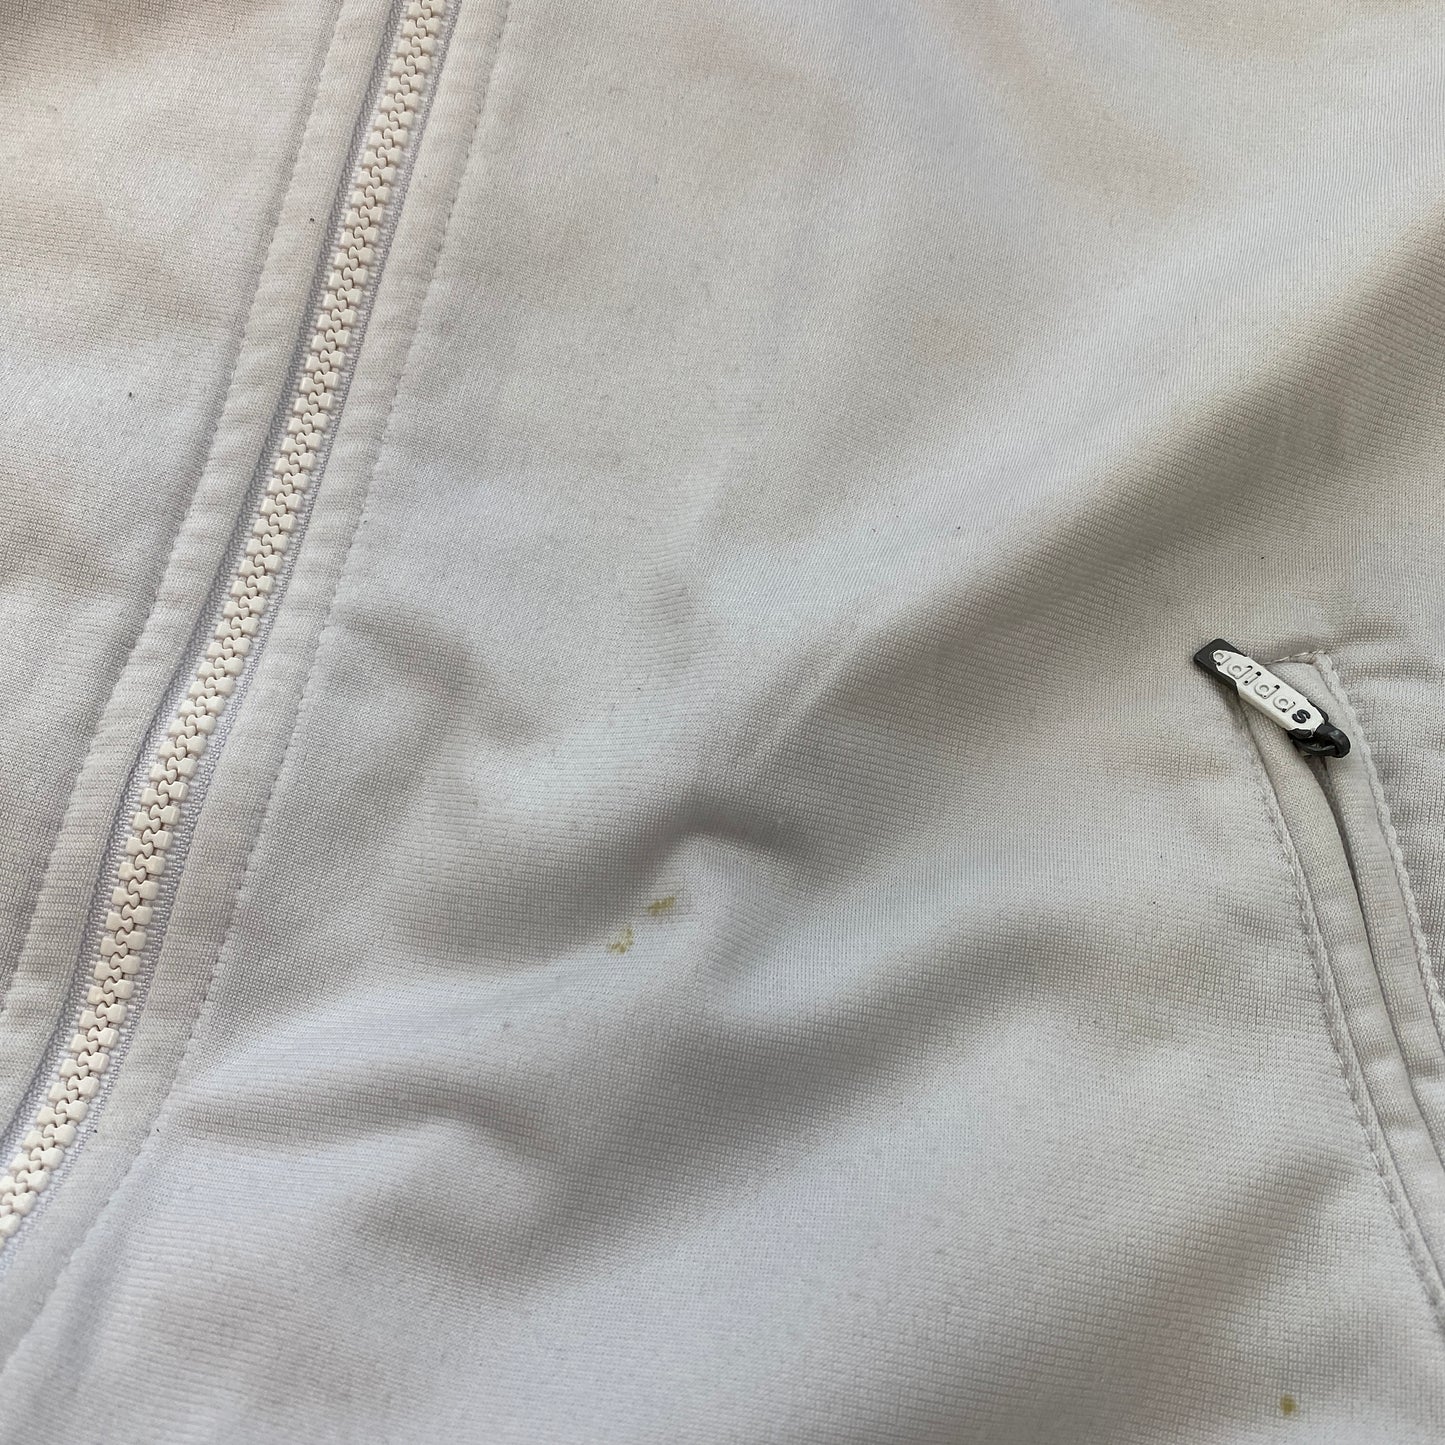 Adidas RARE zip jacket (L)